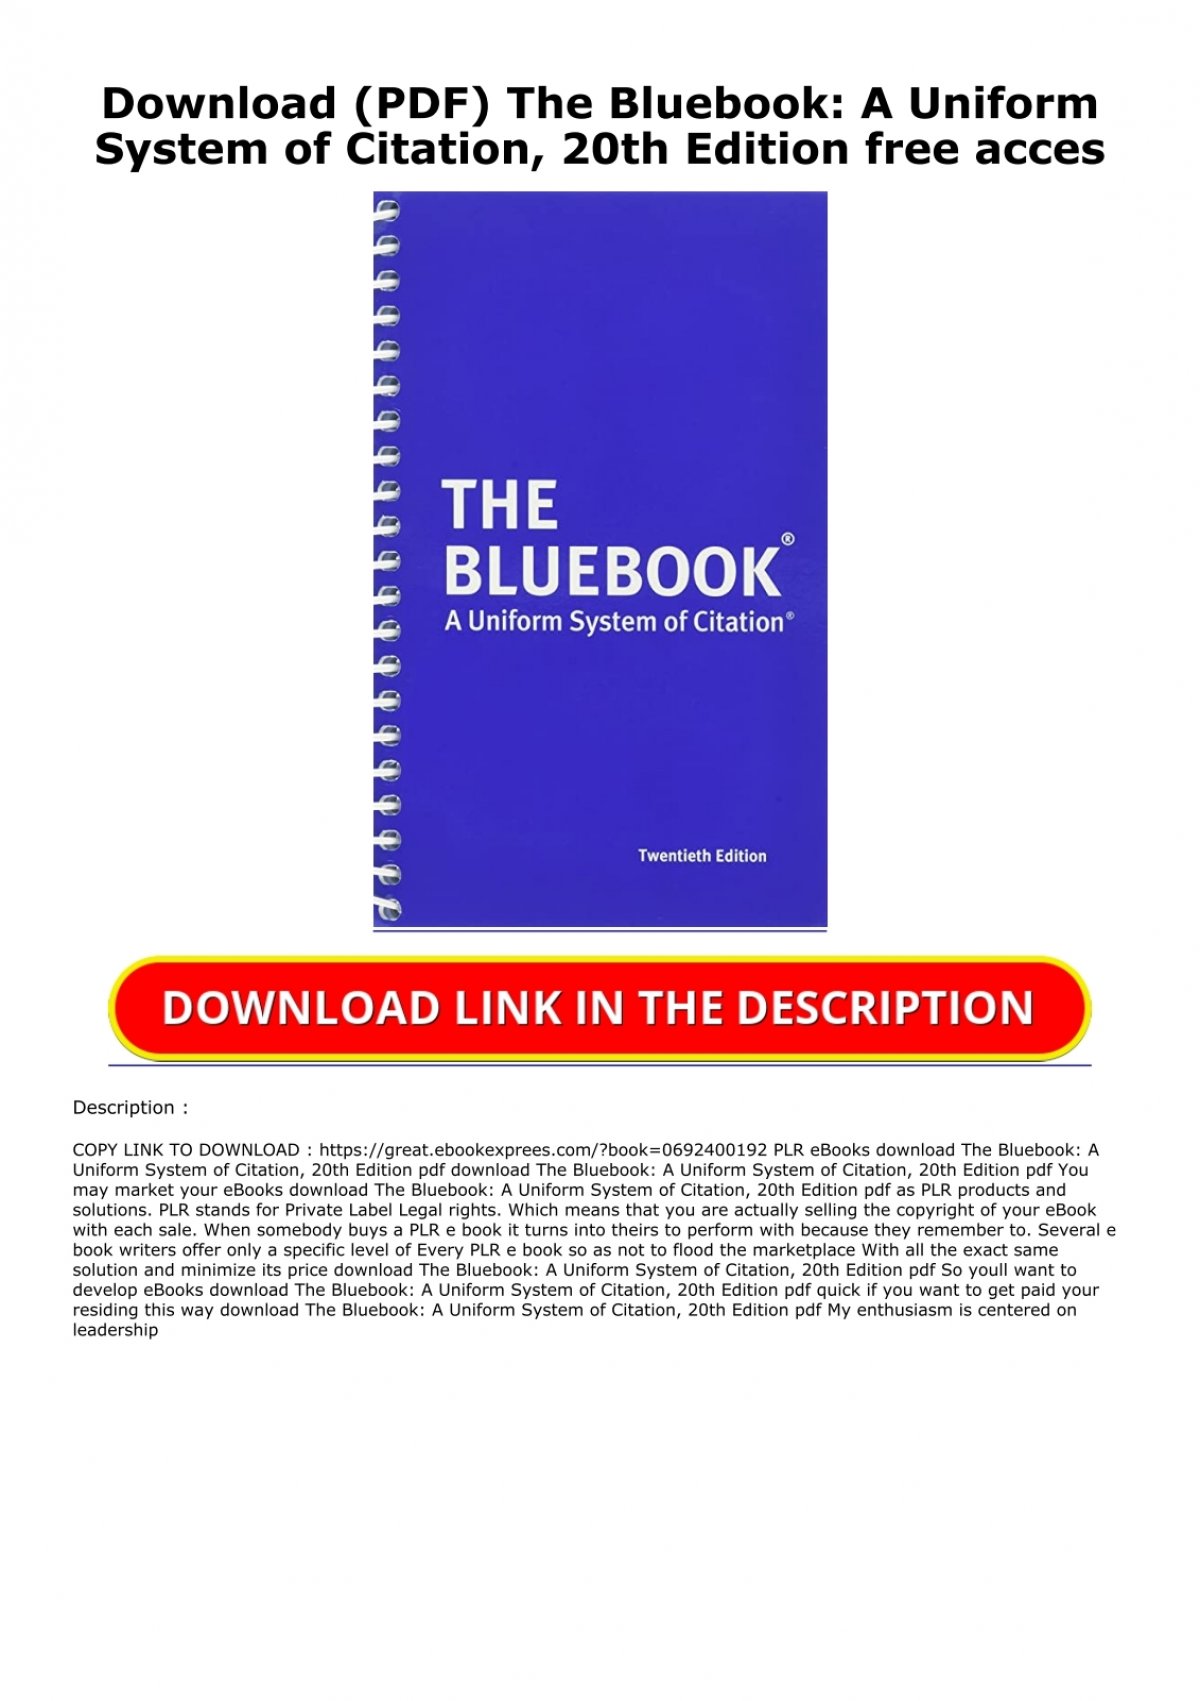 bluebook 20th edition pdf free download